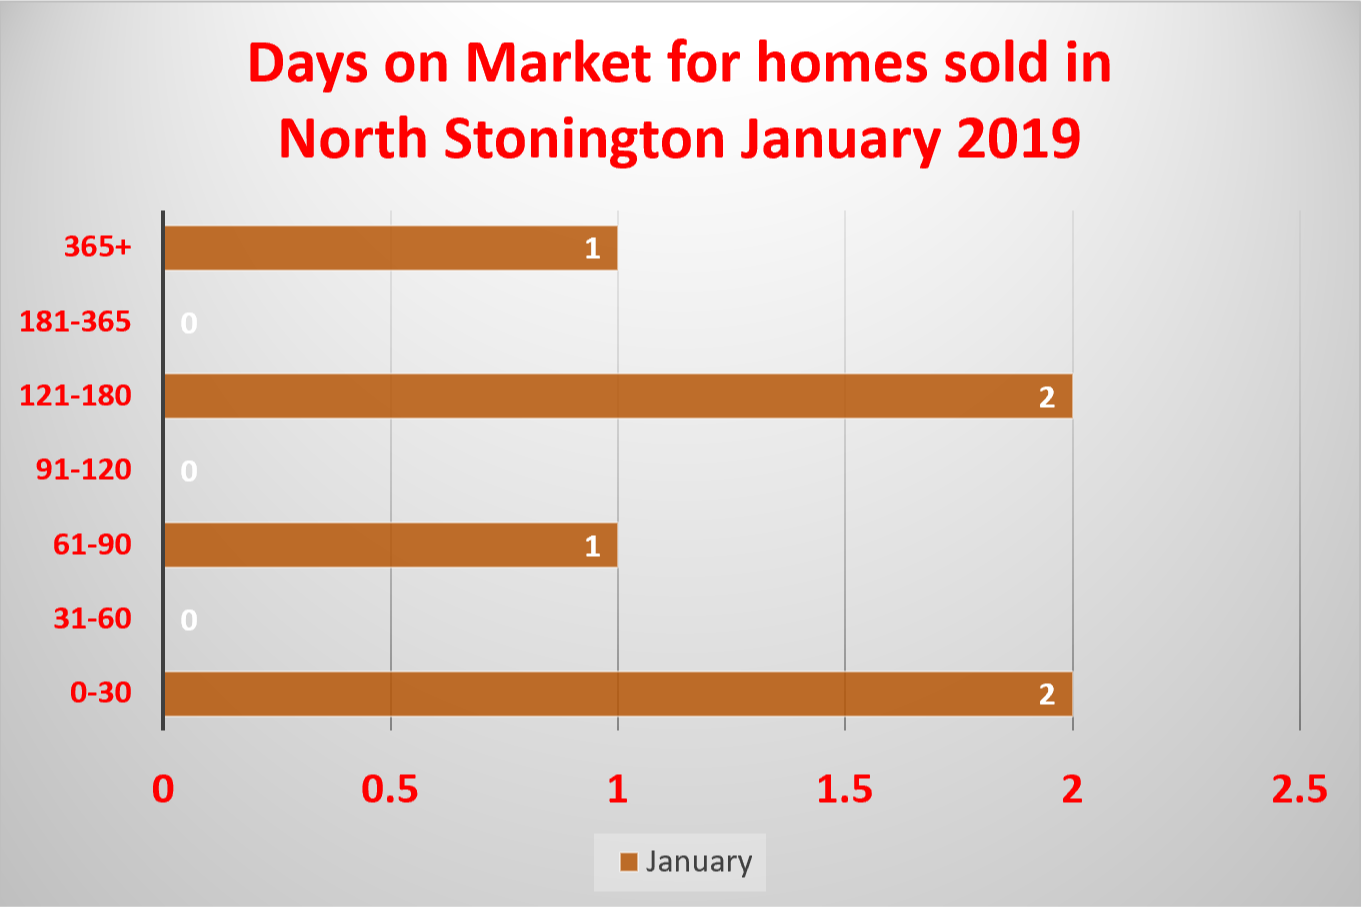 North Stonington Real Estate Market Report Brought to you by North Stonington Realtor Bridget Morrissey